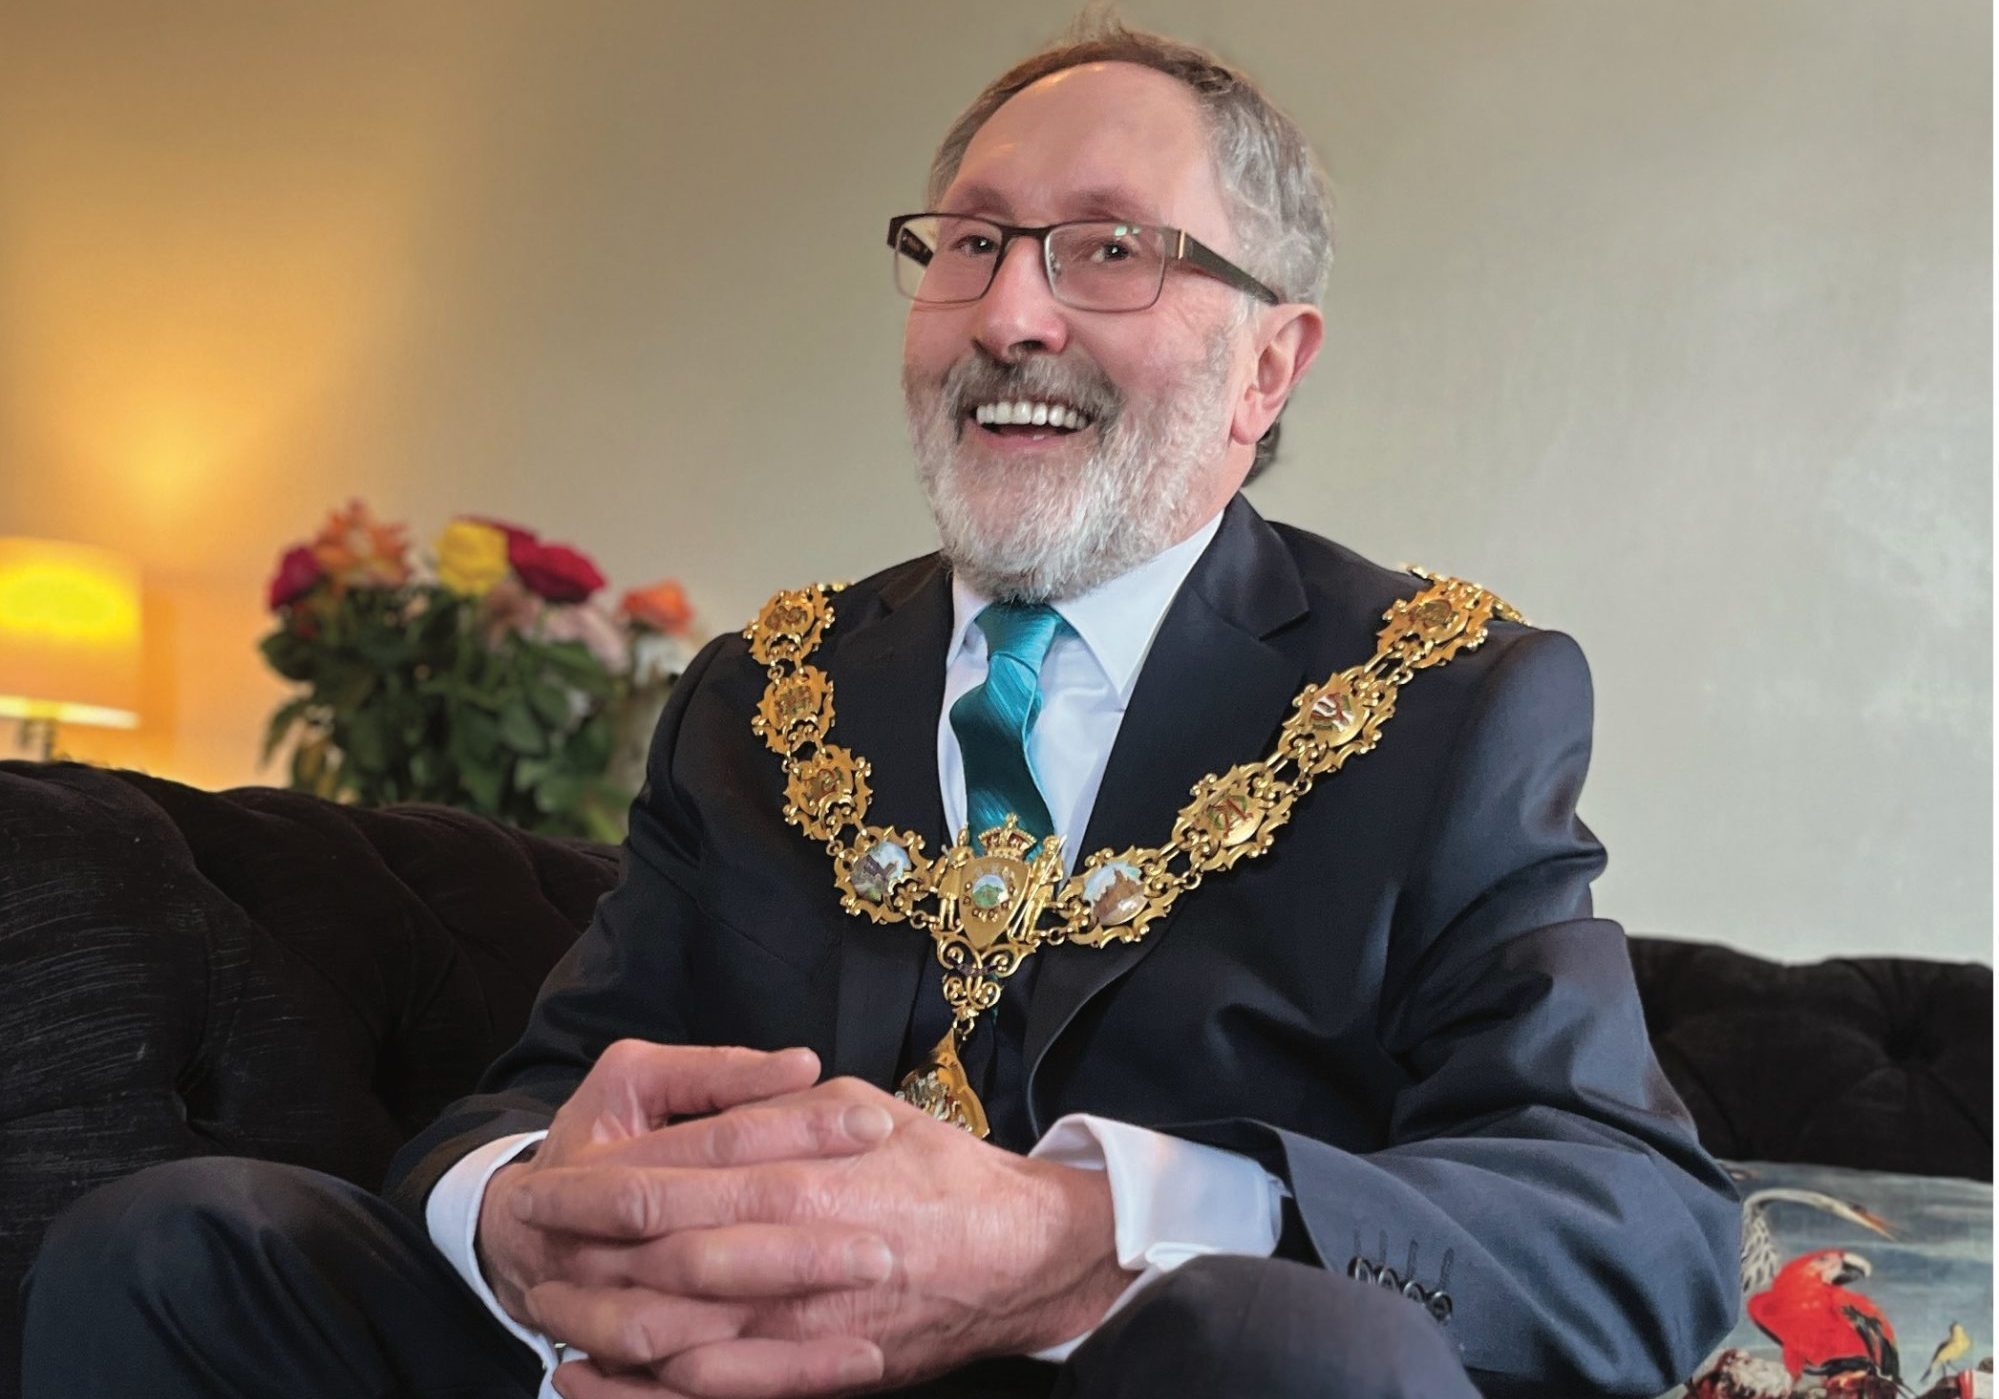 Mayor of Colne Brian Newman